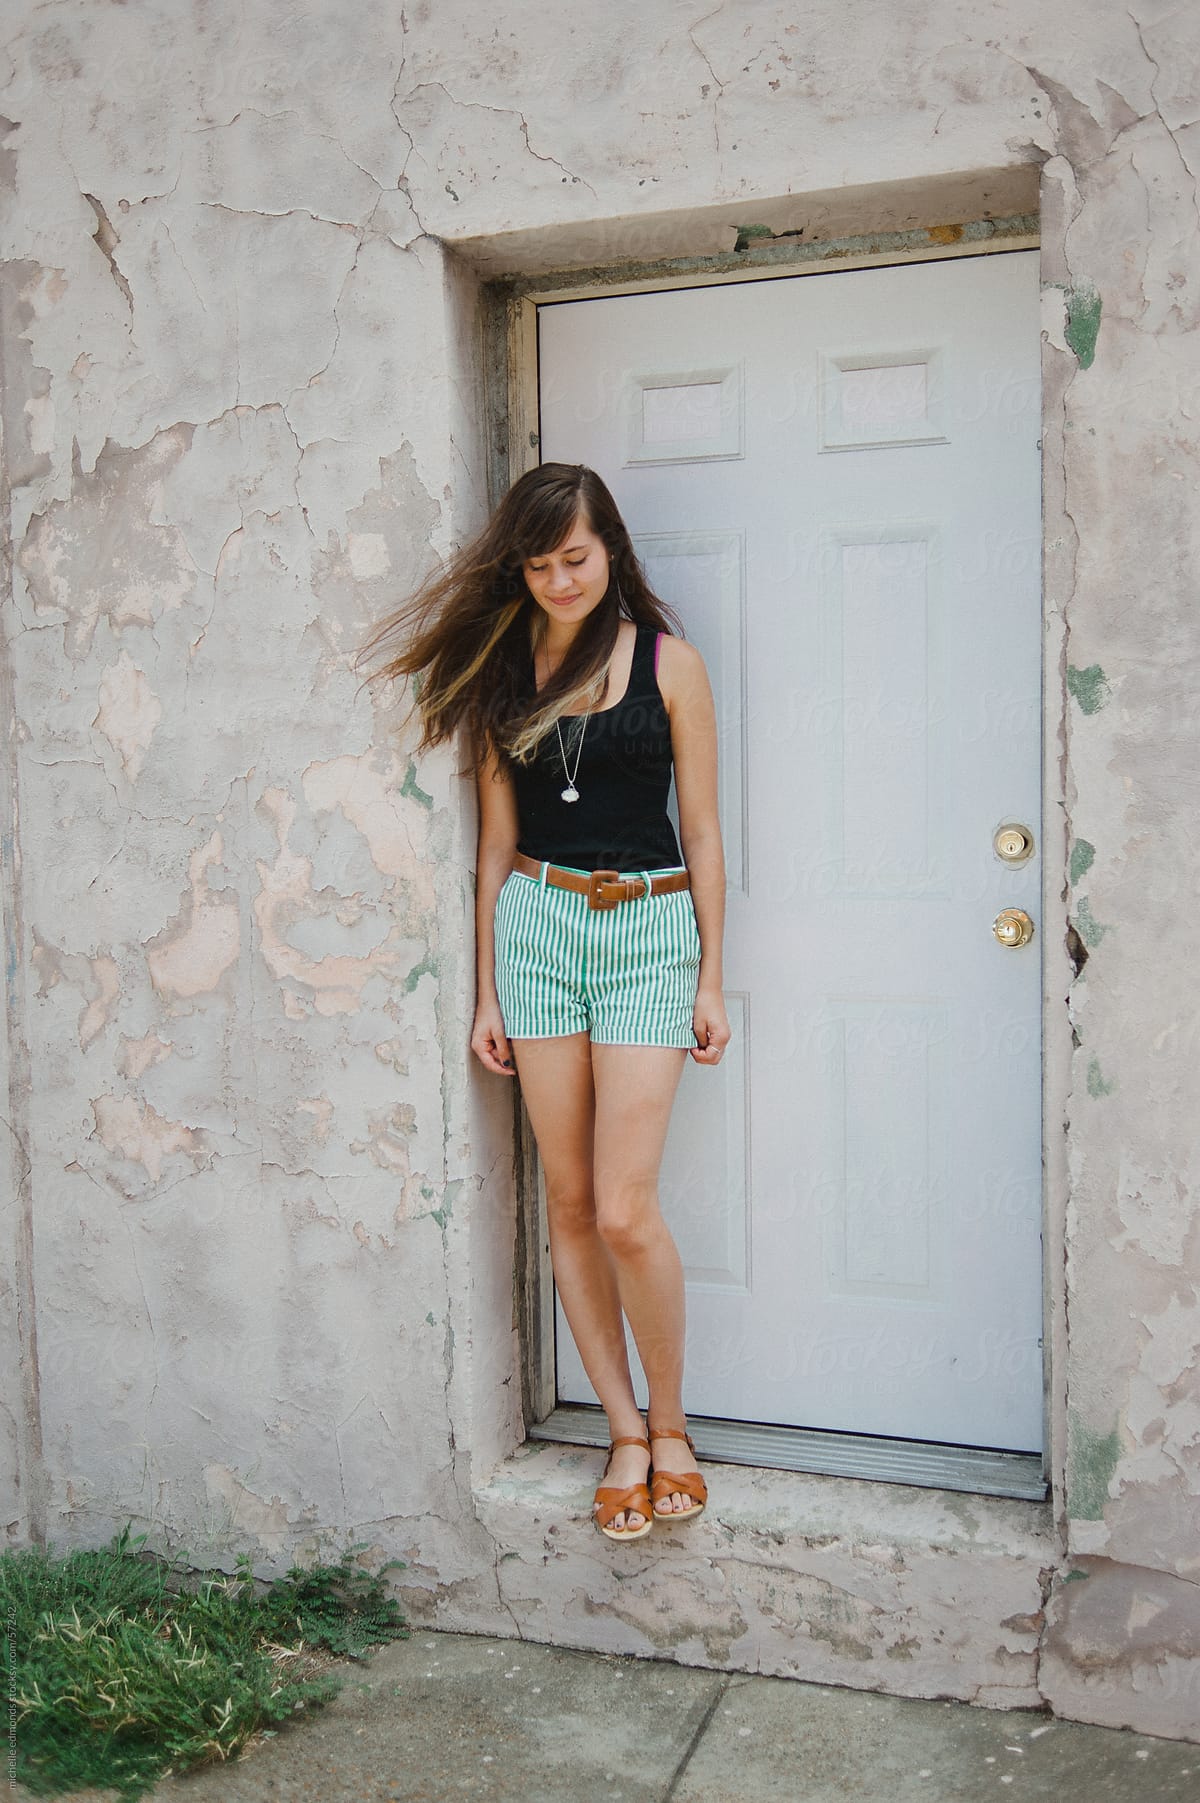 Girl Standing In Doorway By Stocksy Contributor Michelle Edmonds Stocksy 3292